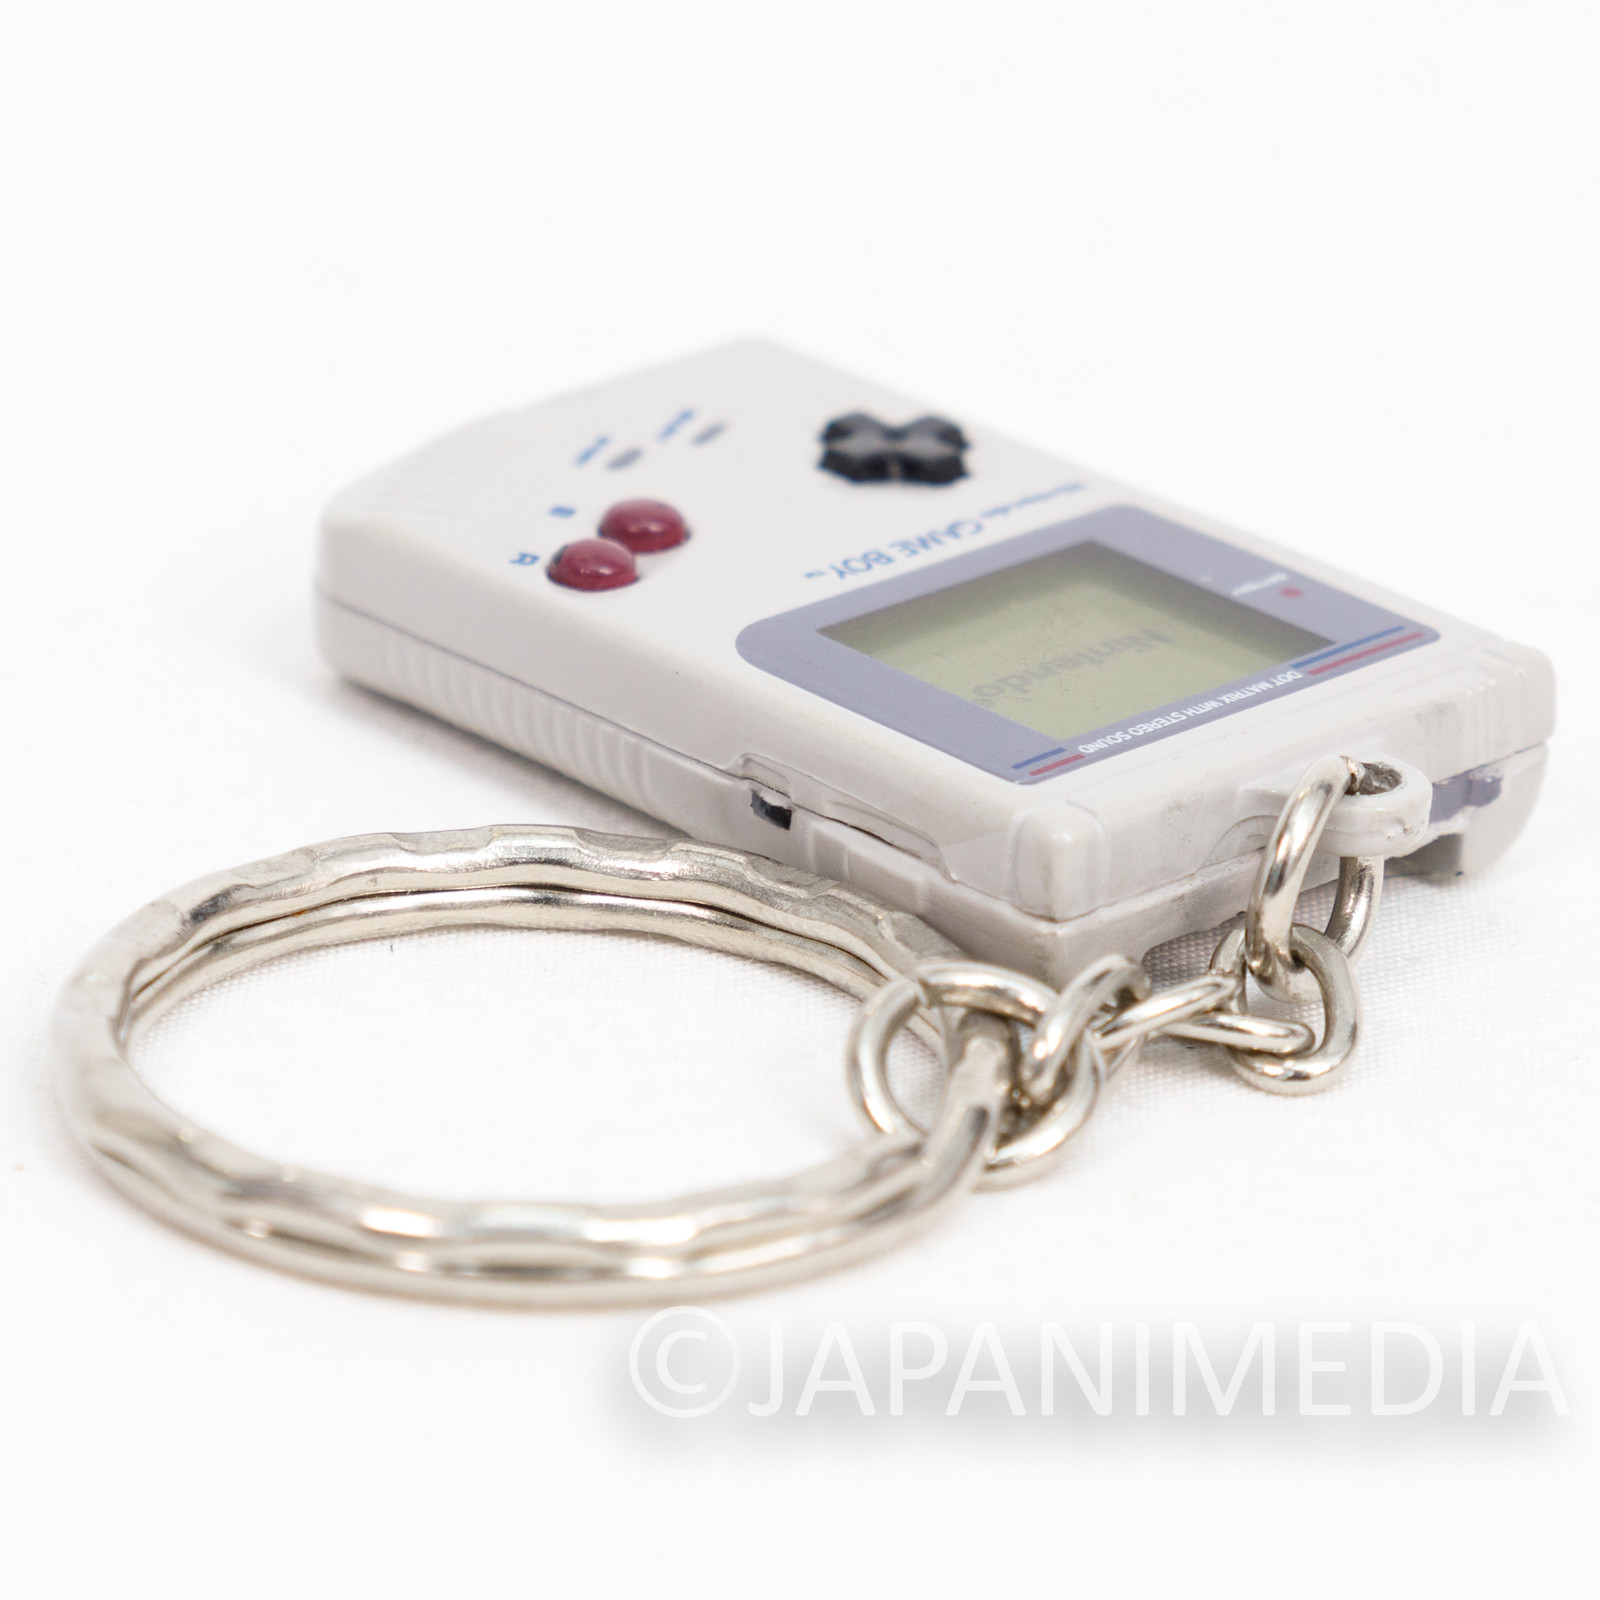 Nintendo Game Console History Miniature Figure Key Chain Game Boy 2 -  Japanimedia Store